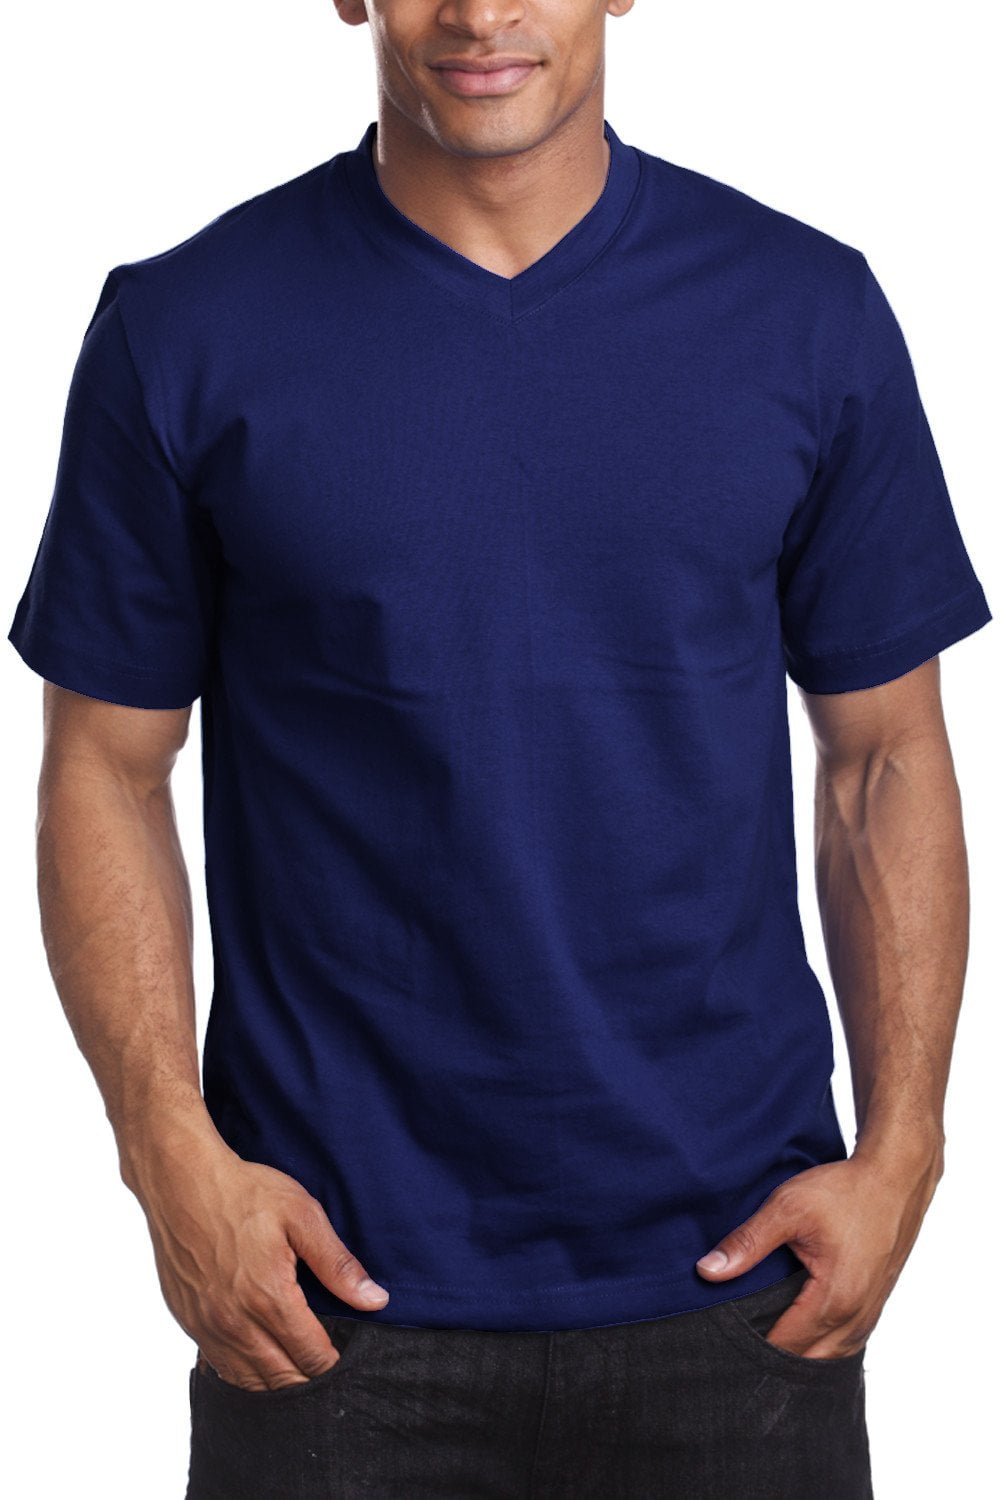 Pro 5 - Pro 5 V-Neck Mens Short Sleeve T-Shirt,Navy,Large - Walmart.com ...